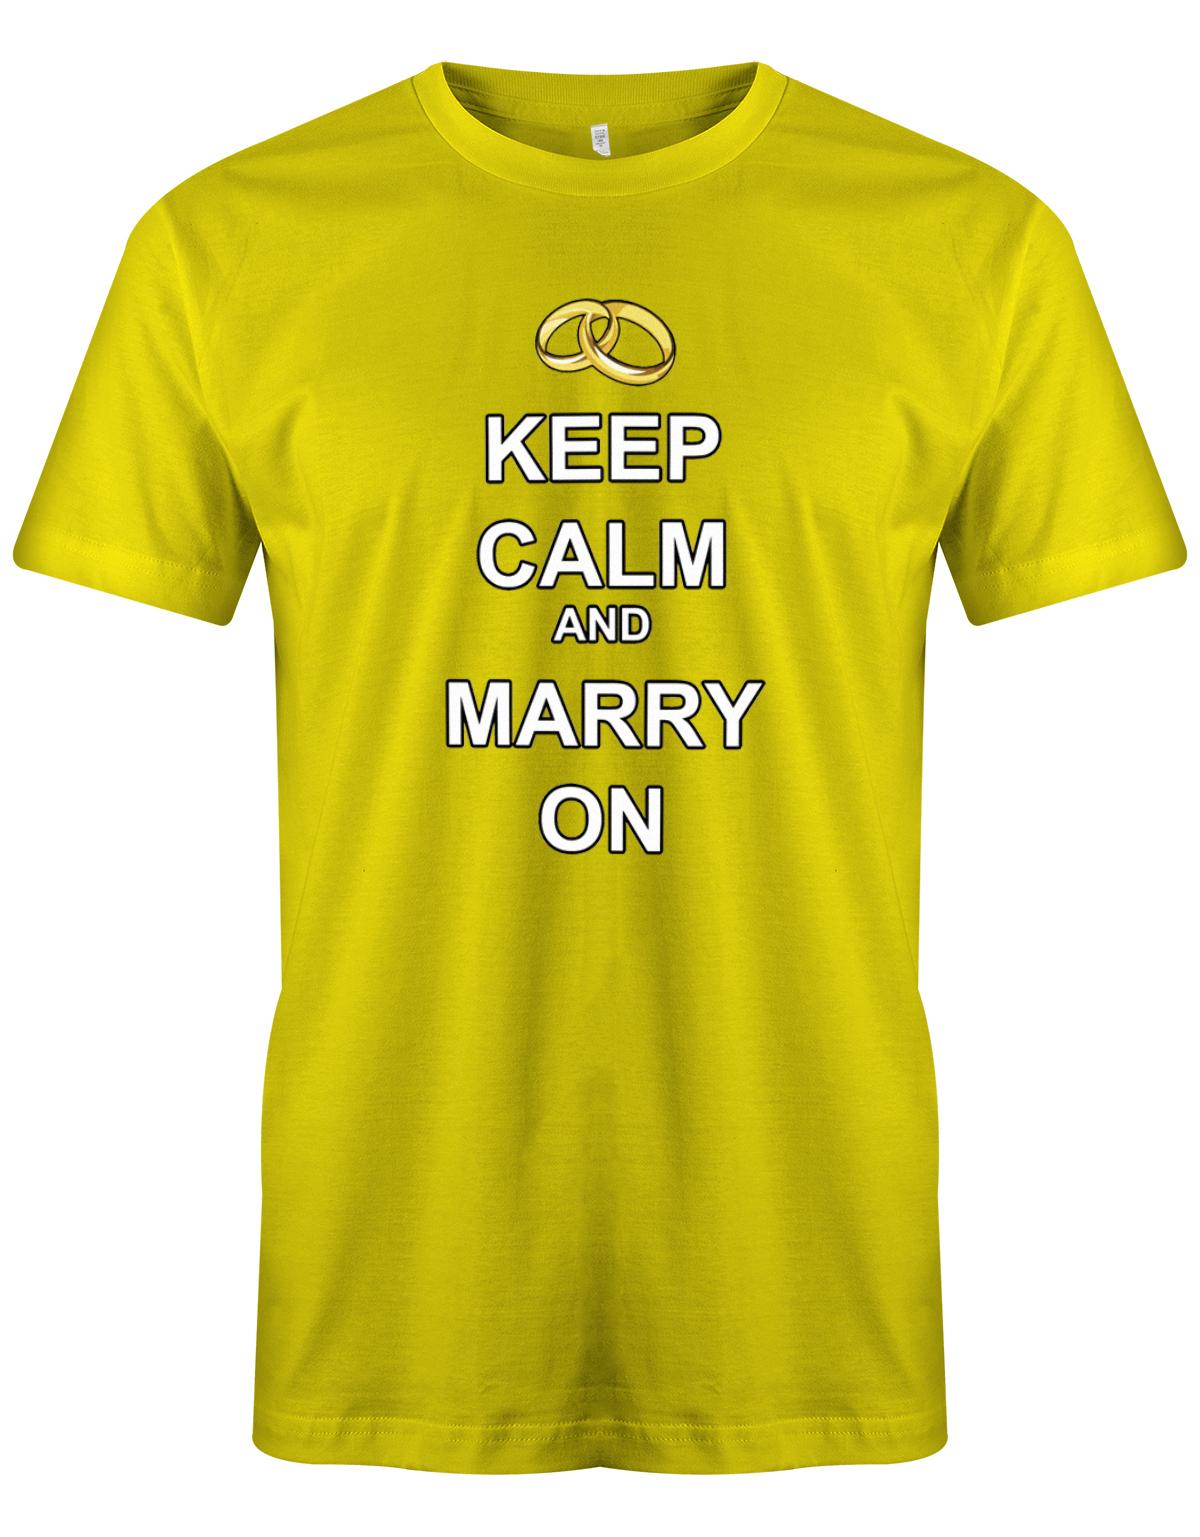 Keep-Calm-and-marry-on-Herren-JGA-Shirt-Gelb